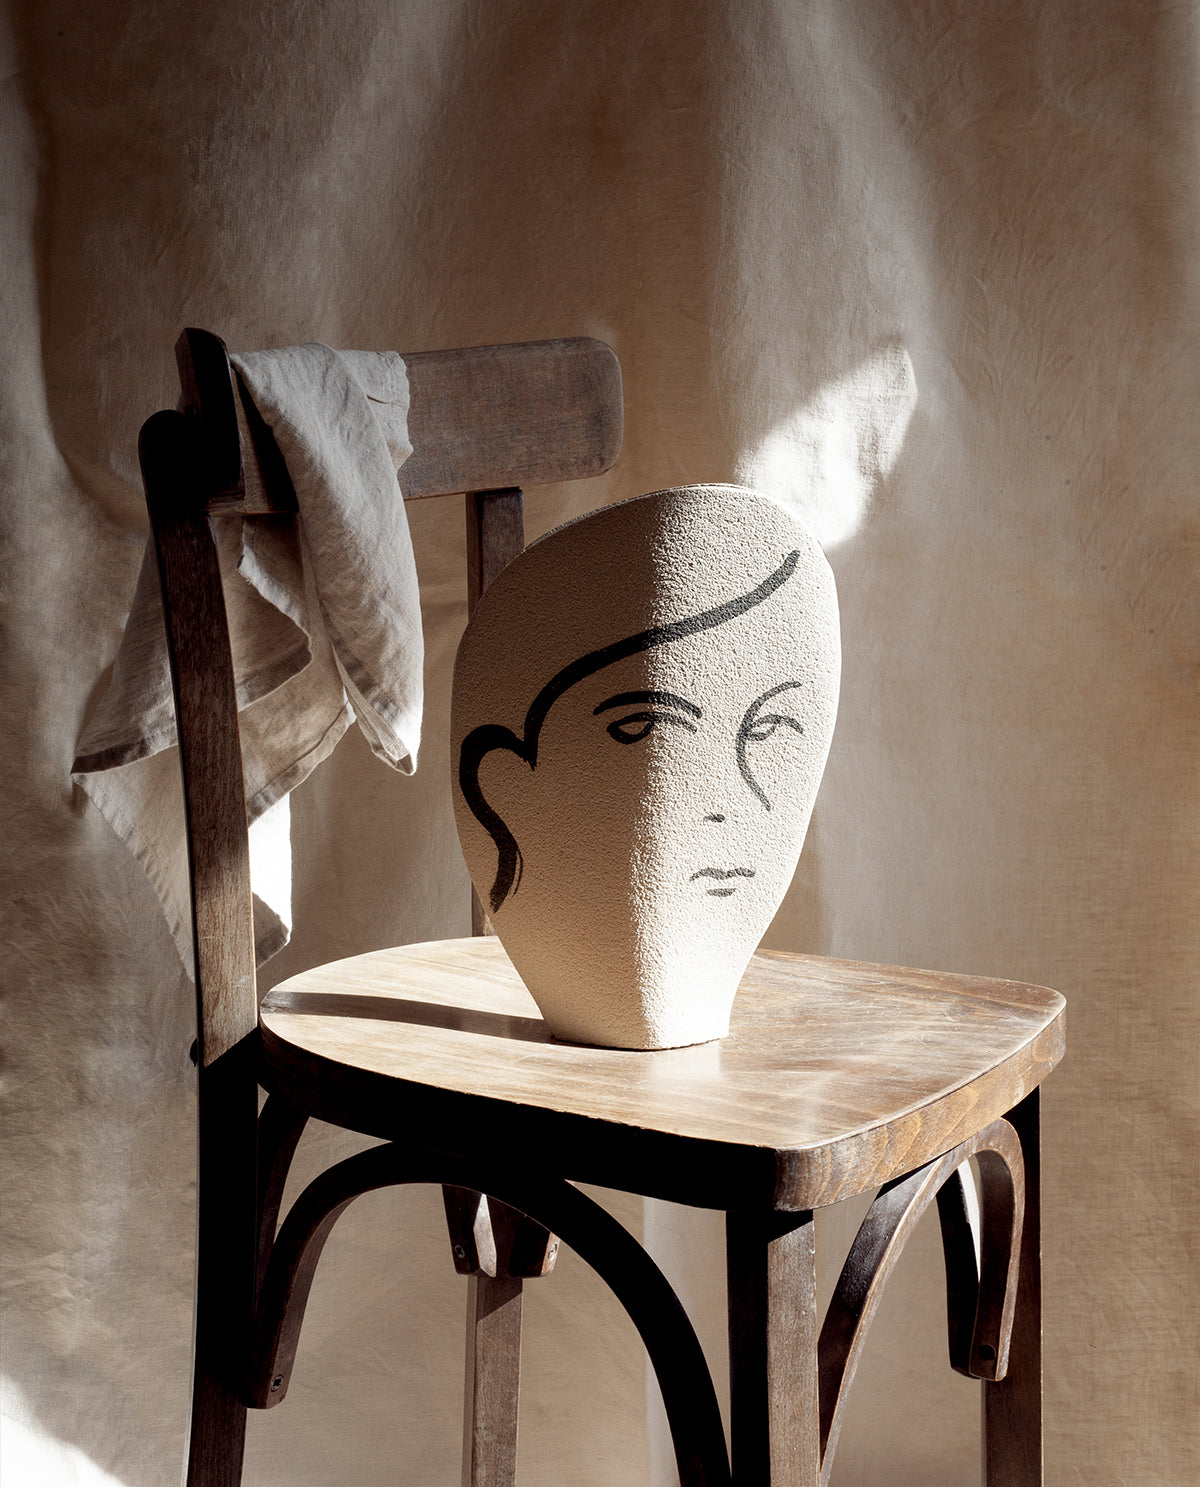 Ceramic Vase ‘Frida N°1'